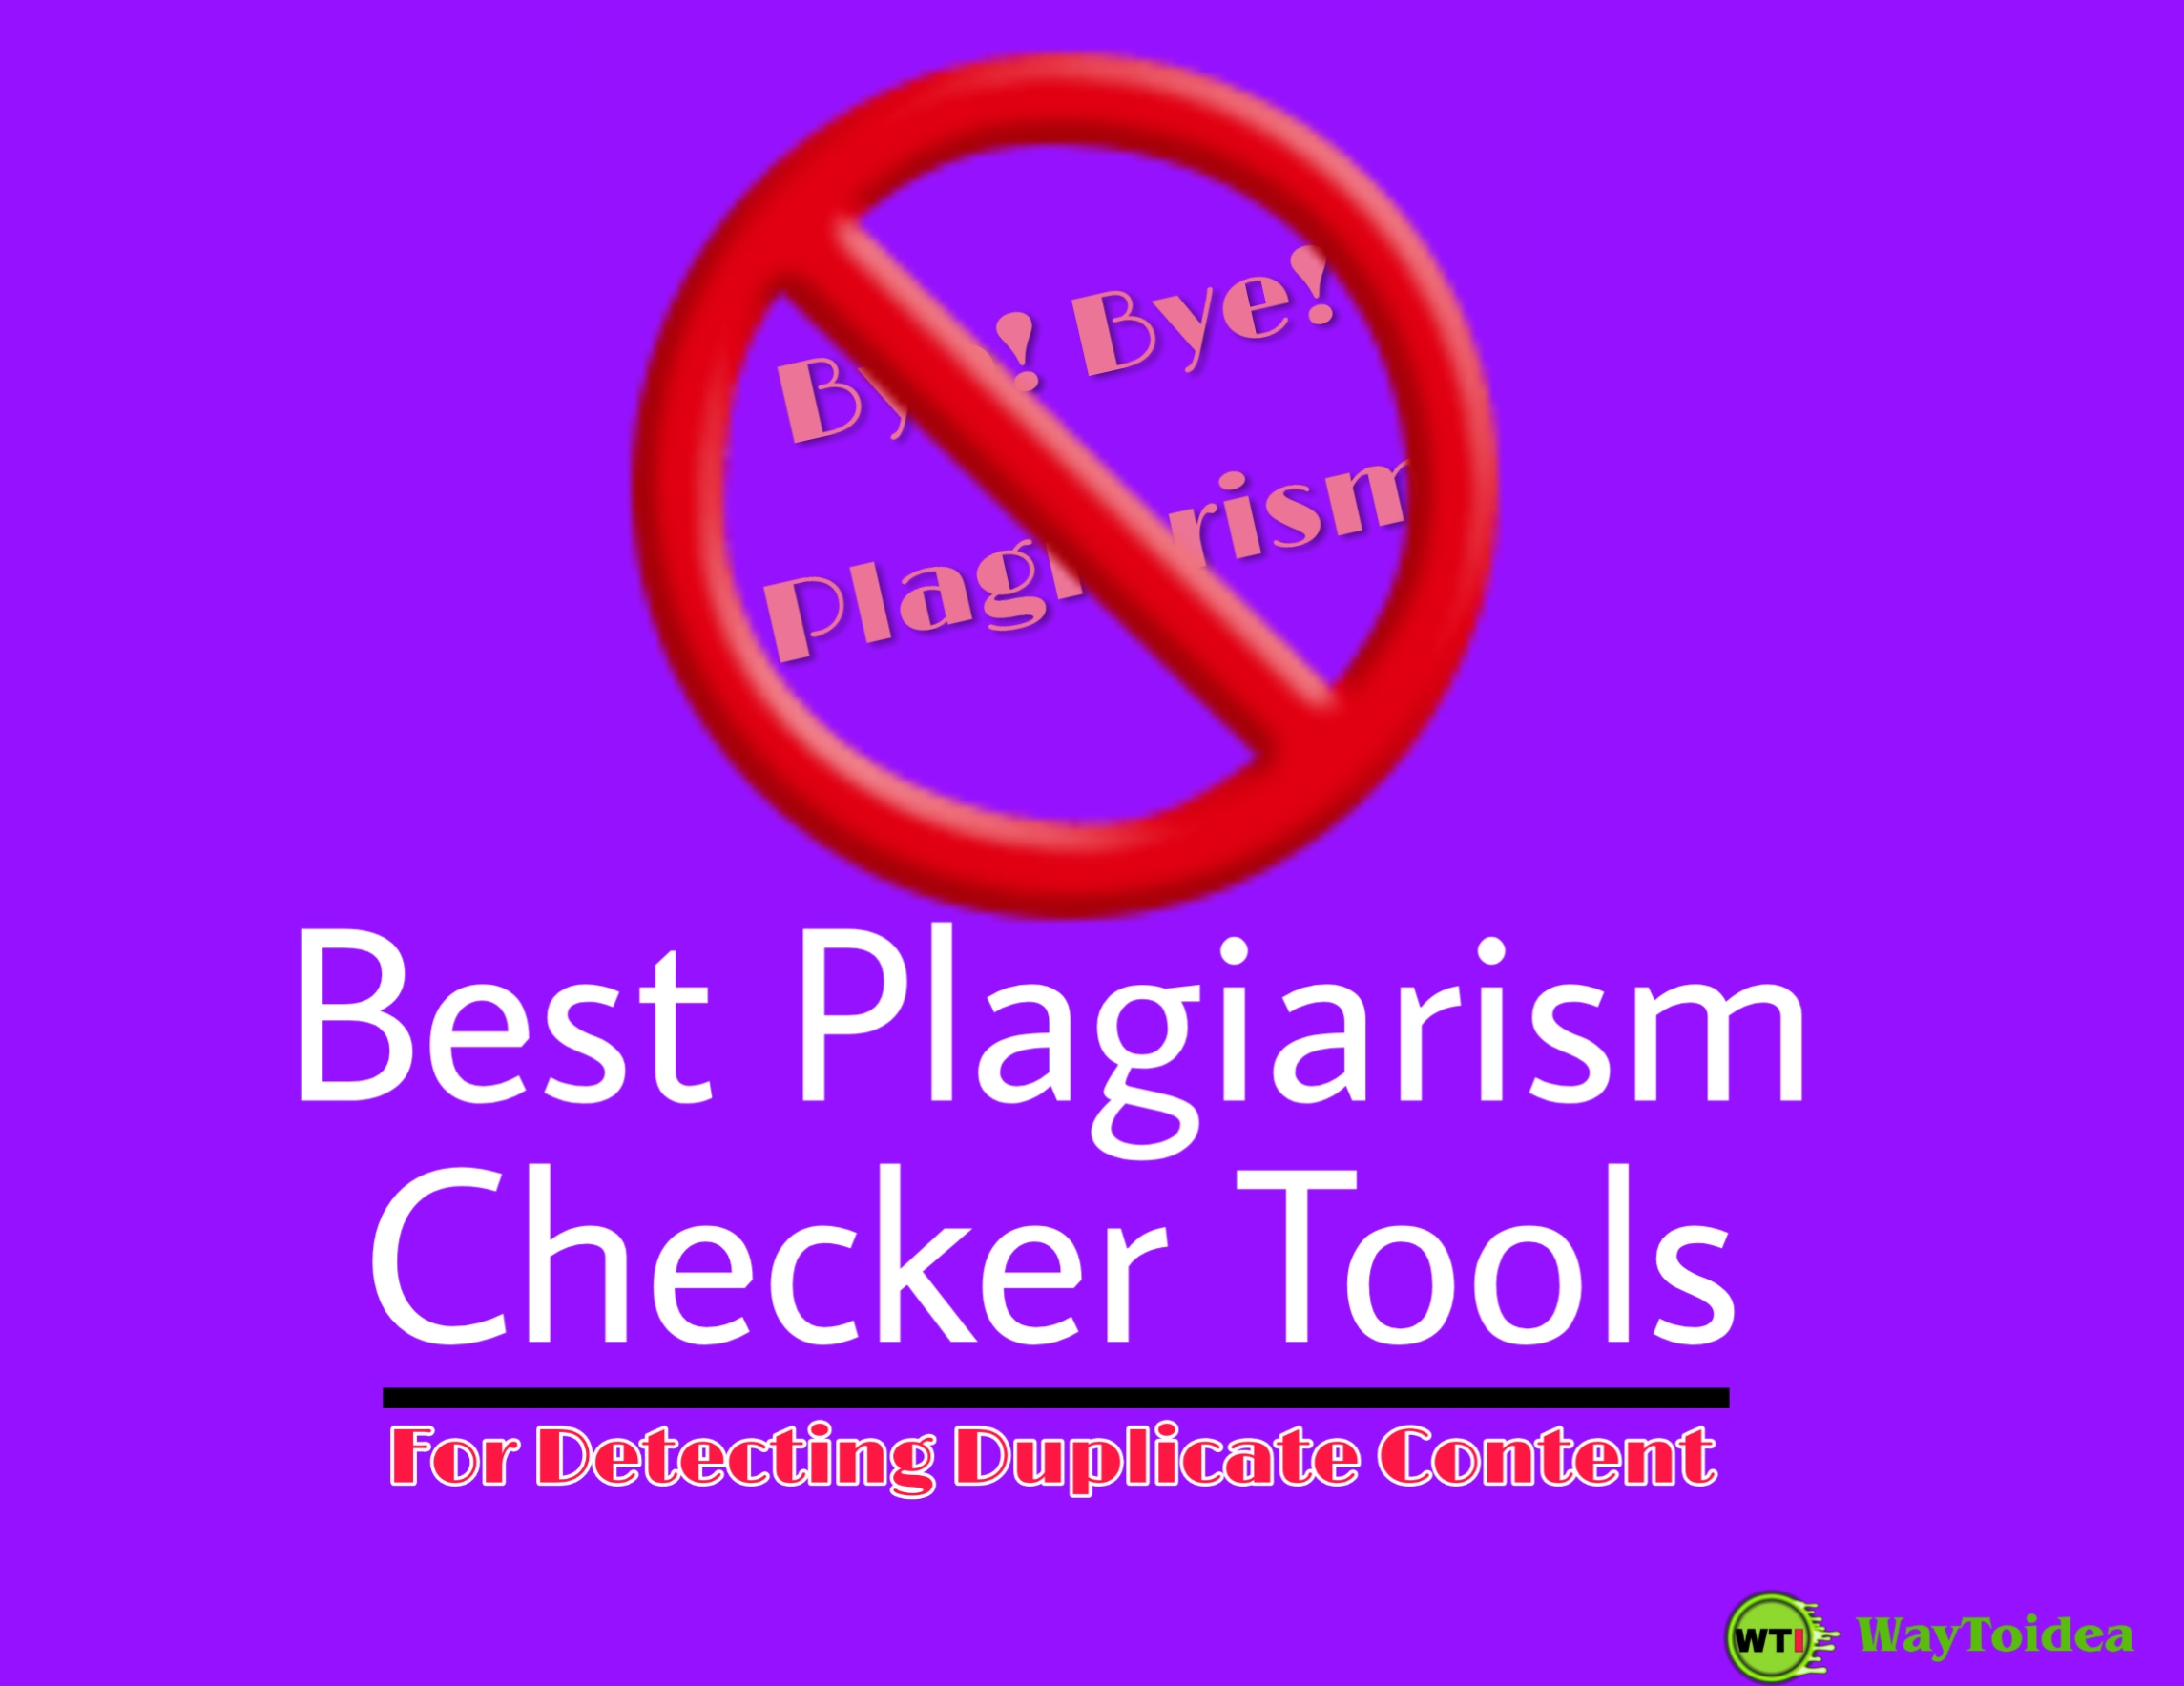 Best Plagiarism Checker Tools 2020, Plagiarism Checker Tools, Duplicate Content Checker, Plagiarism Checker